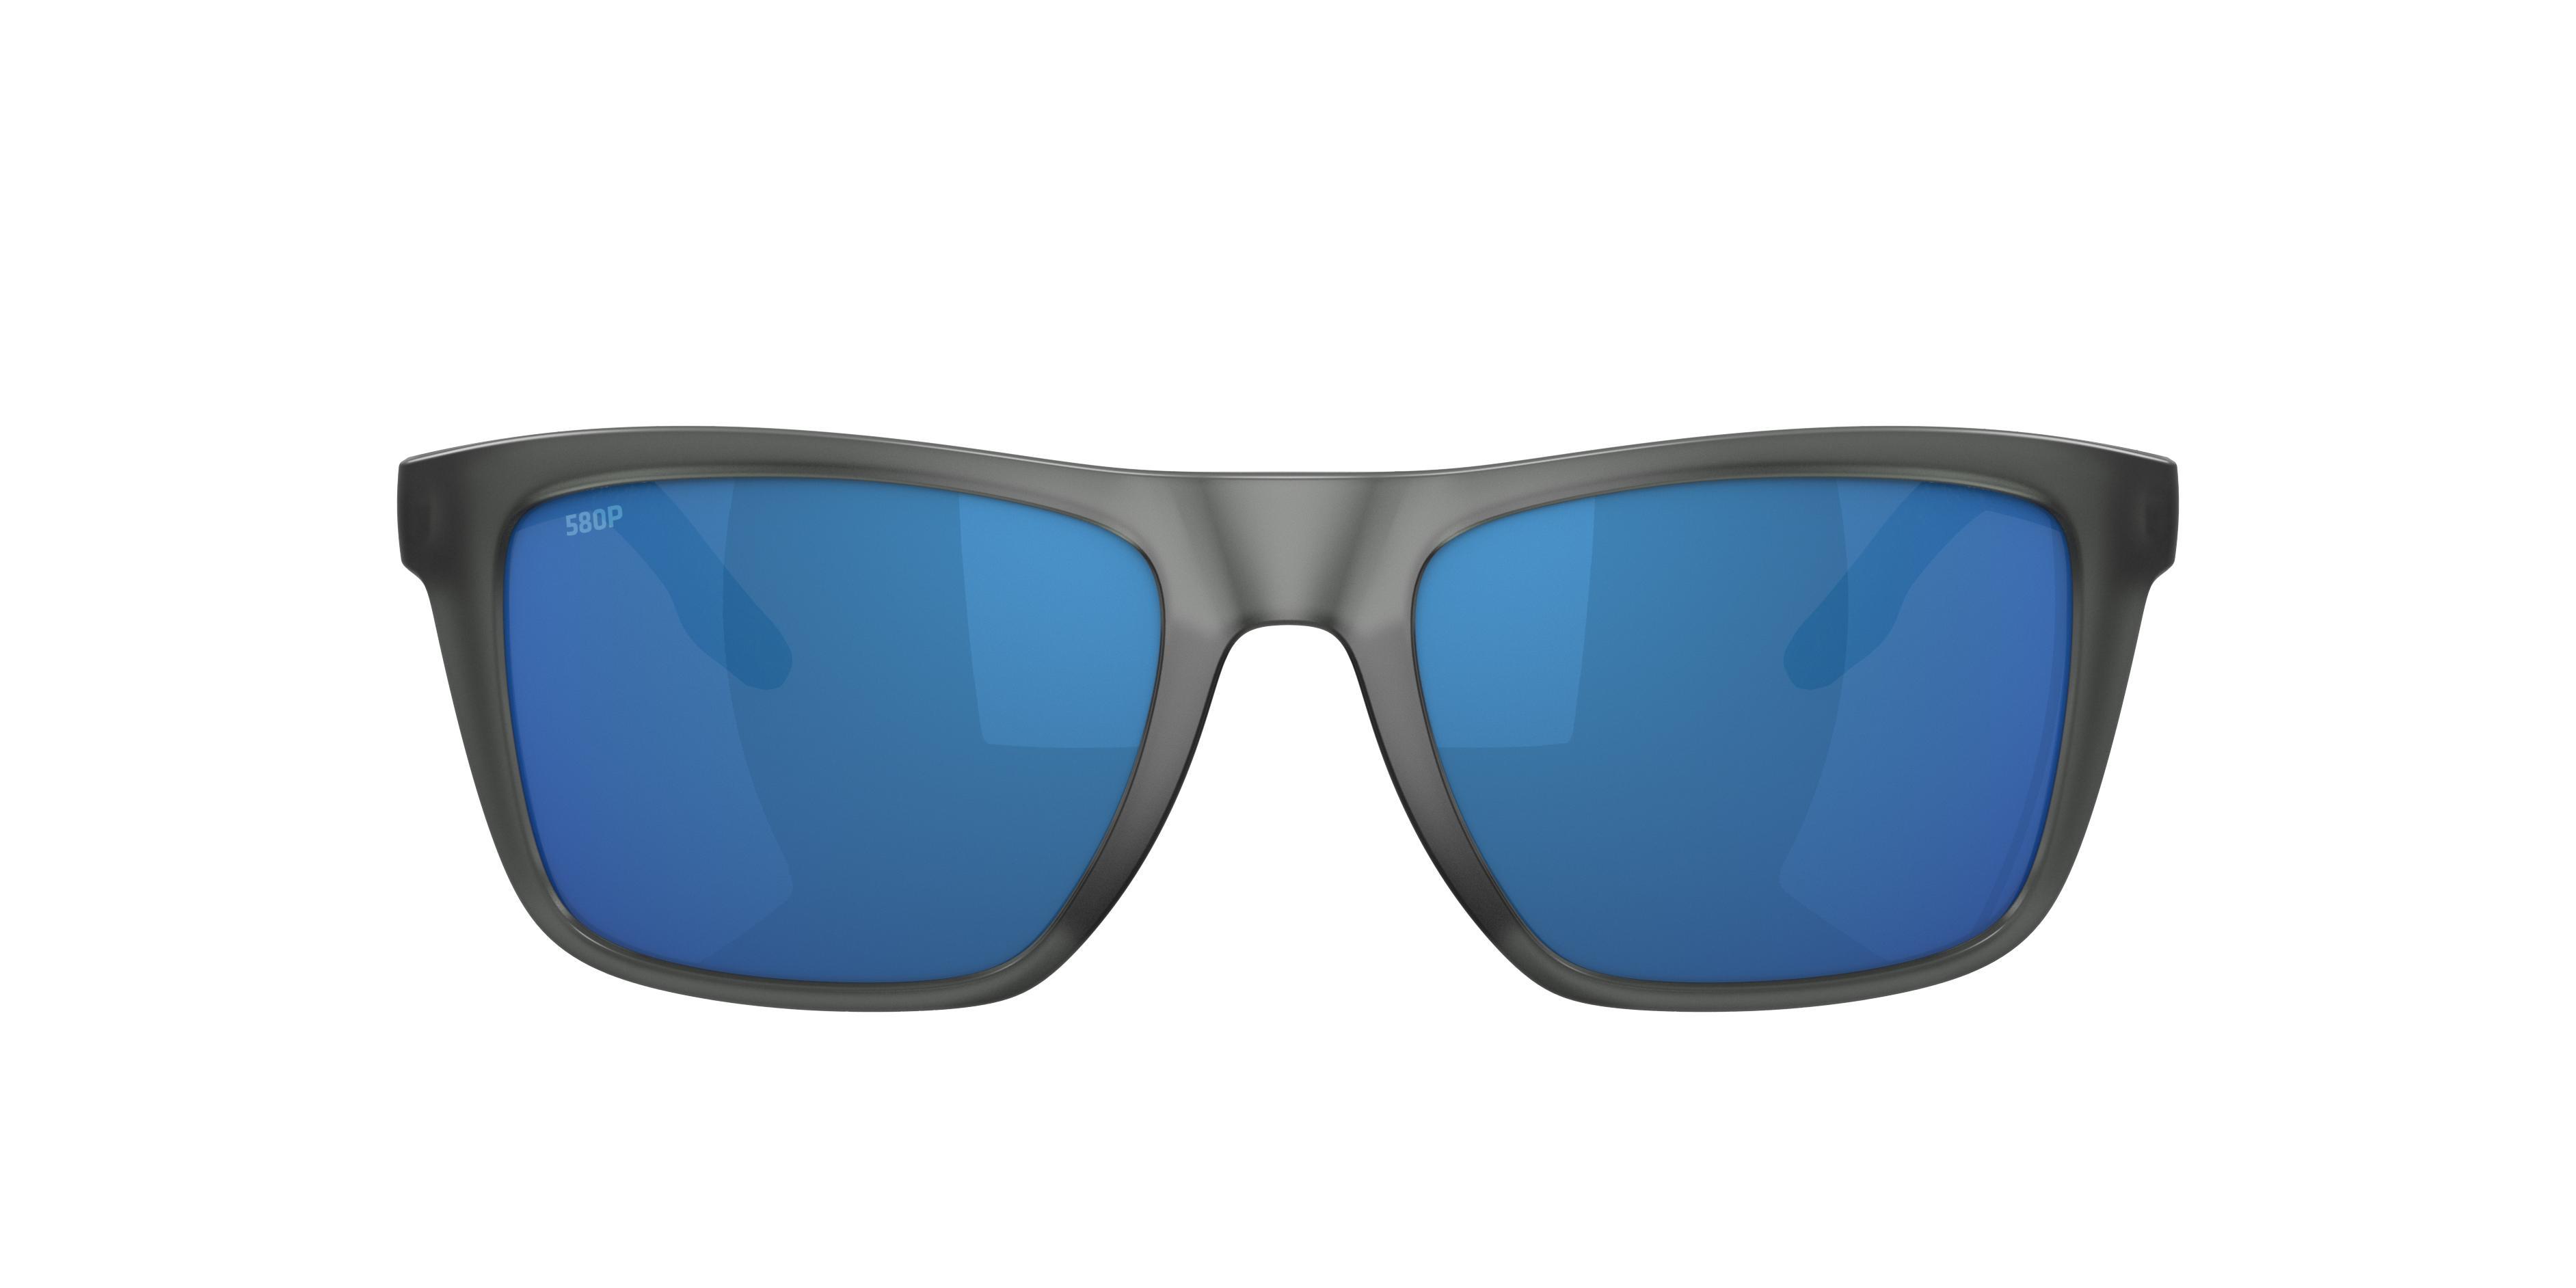 Costa Del Mar Mainsail 55mm Mirrored Polarized Rectangular Sunglasses Product Image